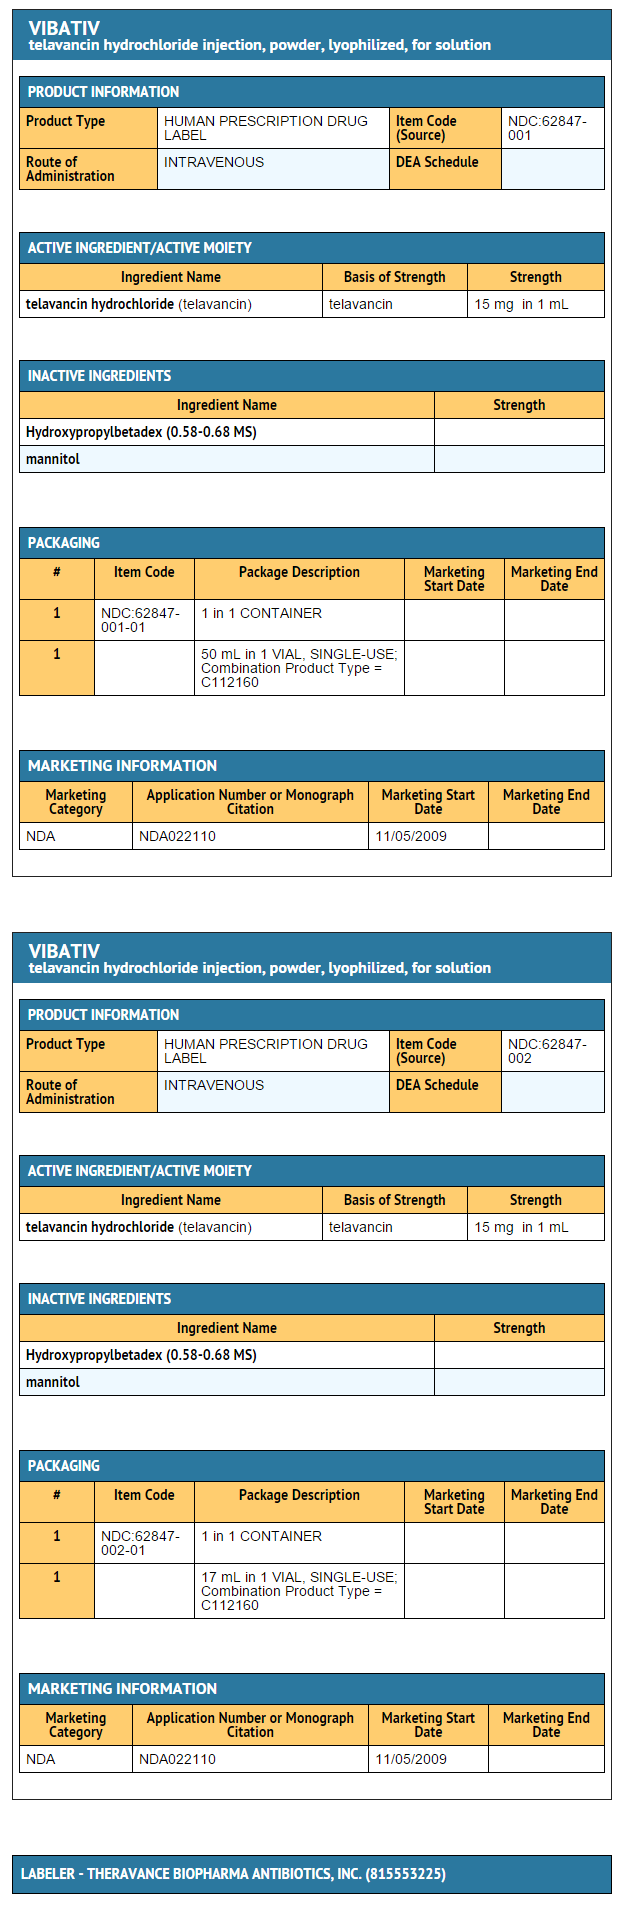 File:Telavancin hydrochloride FDA package label.png